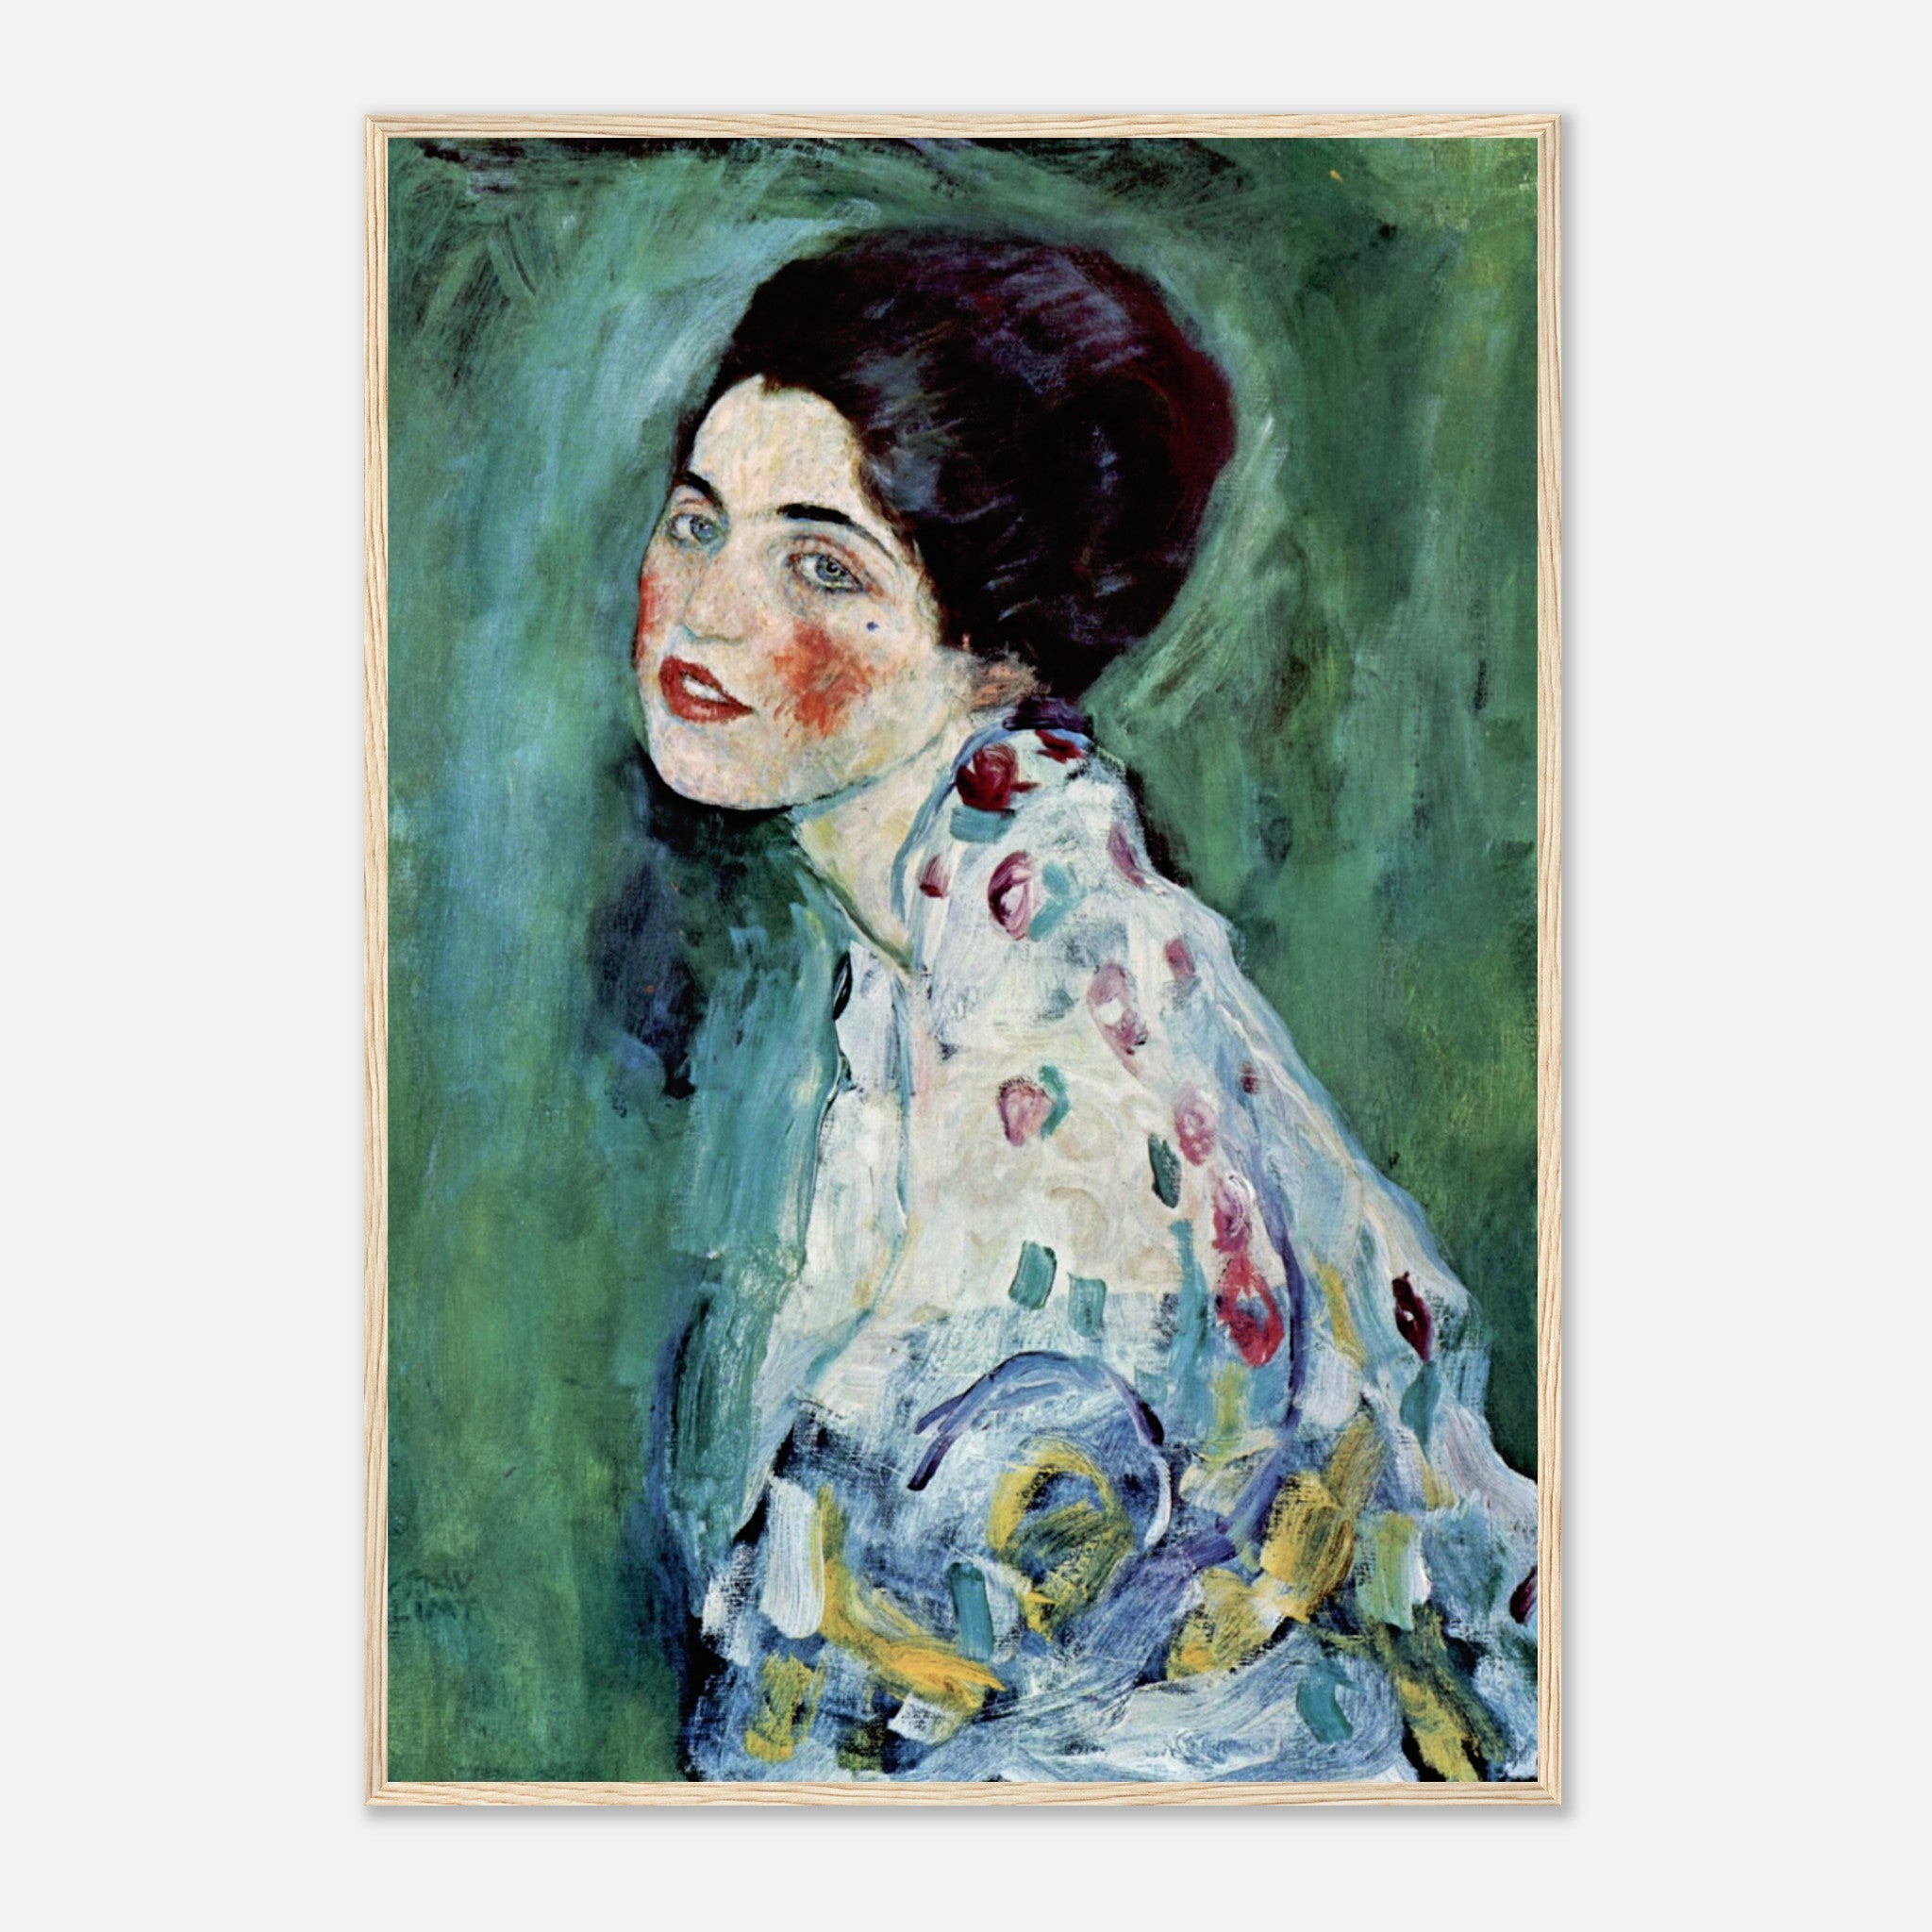 Gustav Klimts Porträteiner Dame (1916-1917) Poster